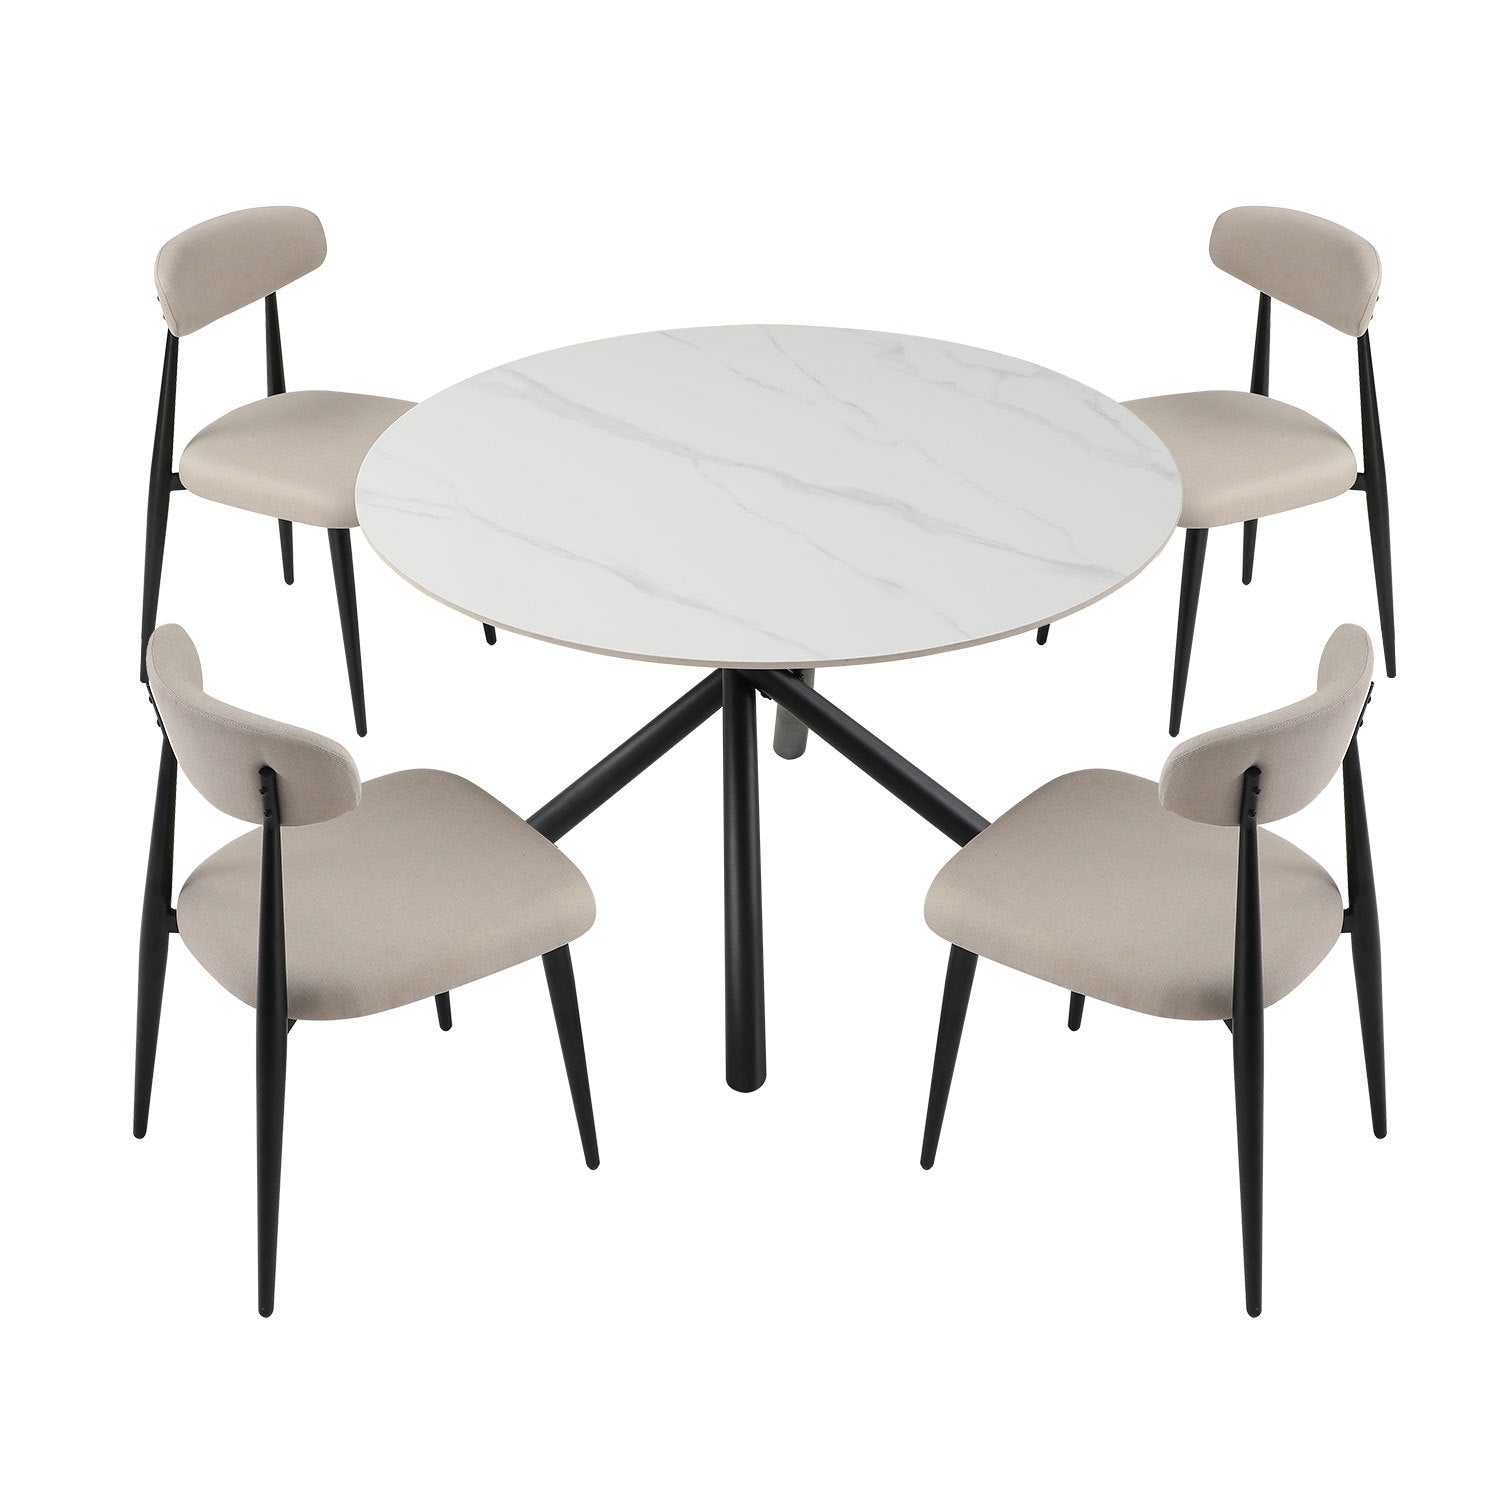 47.24" Modern Round Dining Table White Sintered